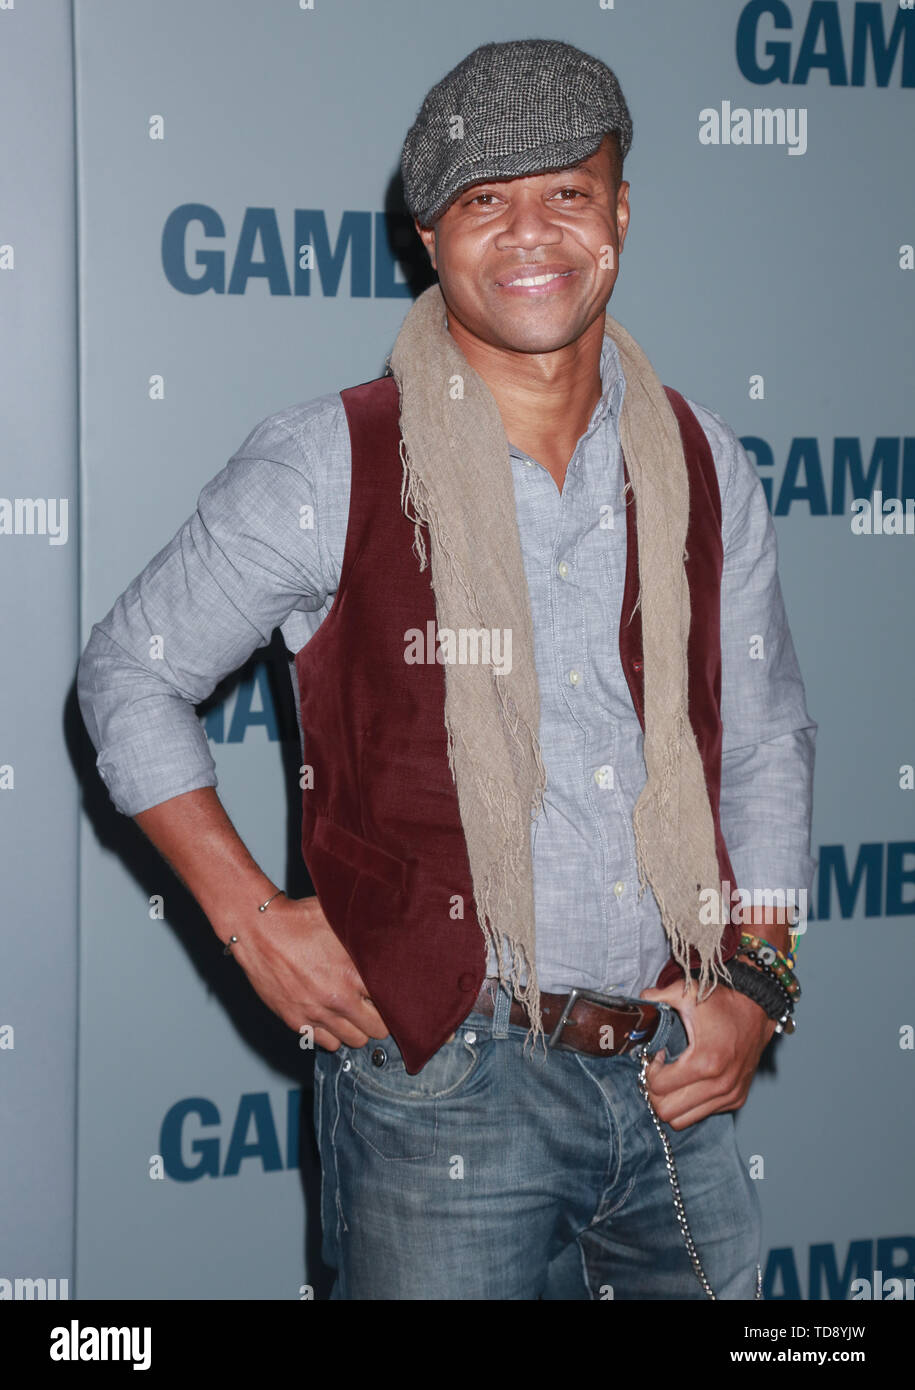 'The Gambler' film premiere, New York - 10 Dec 2014 - Cuba Gooding Jr. Stock Photo